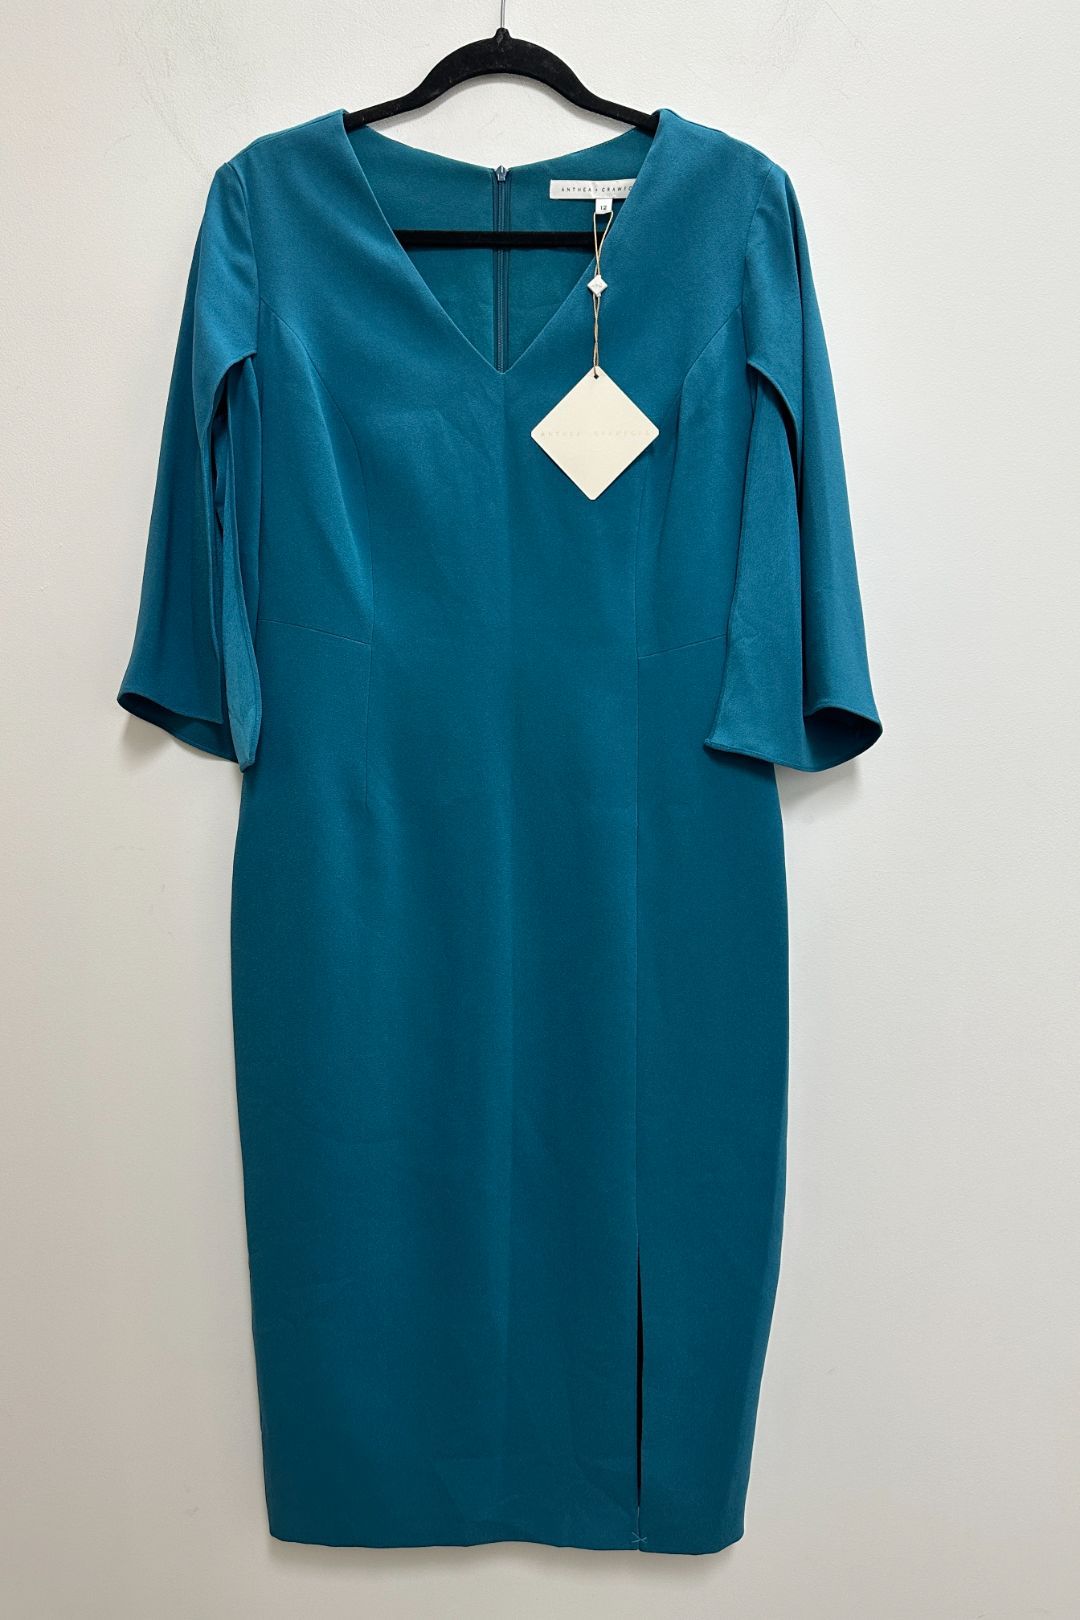 Anthea Crawford Malina Ocean Blue Midi Dress